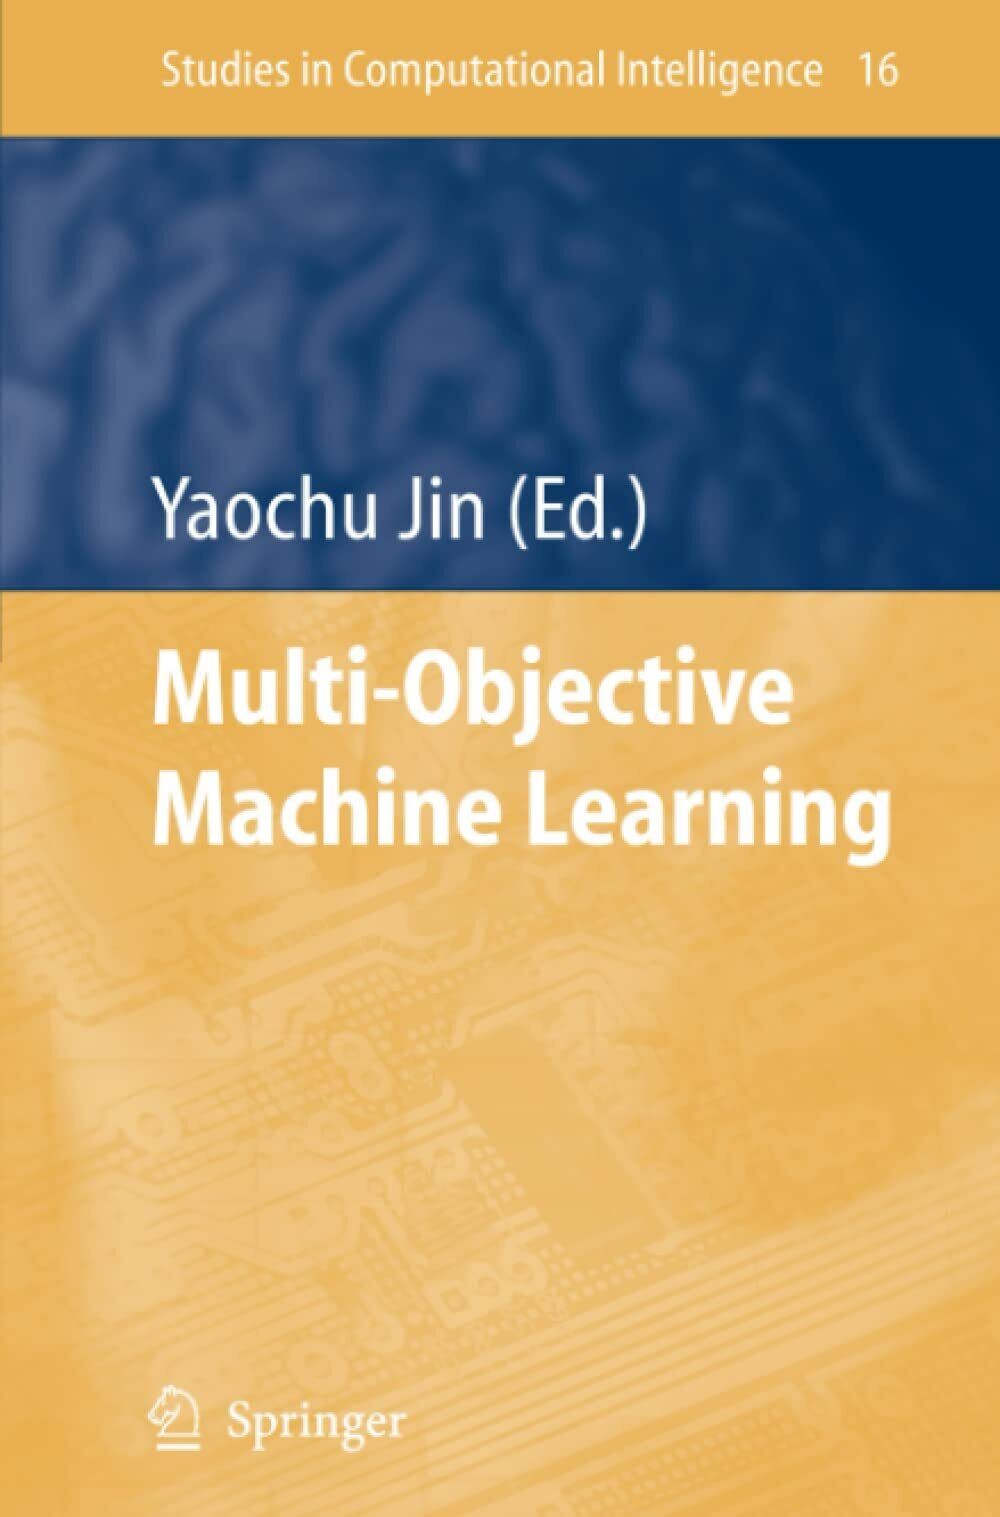 Multi-Objective Machine Learning - Yaochu Jin - Springer, 2010